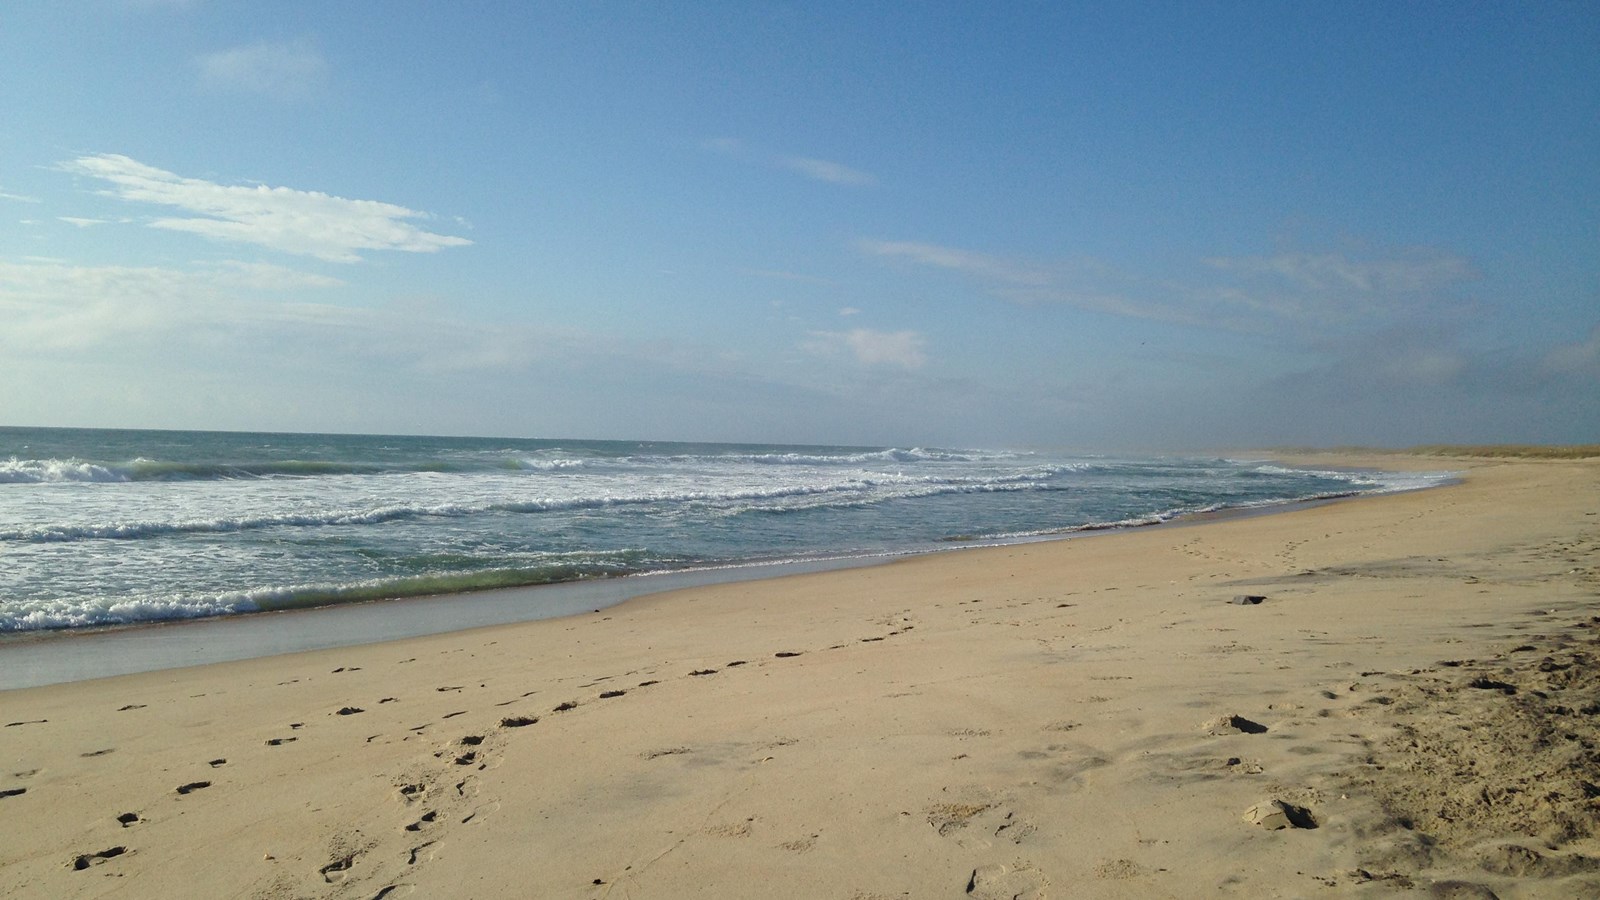 blue waves crashing on sandy beach